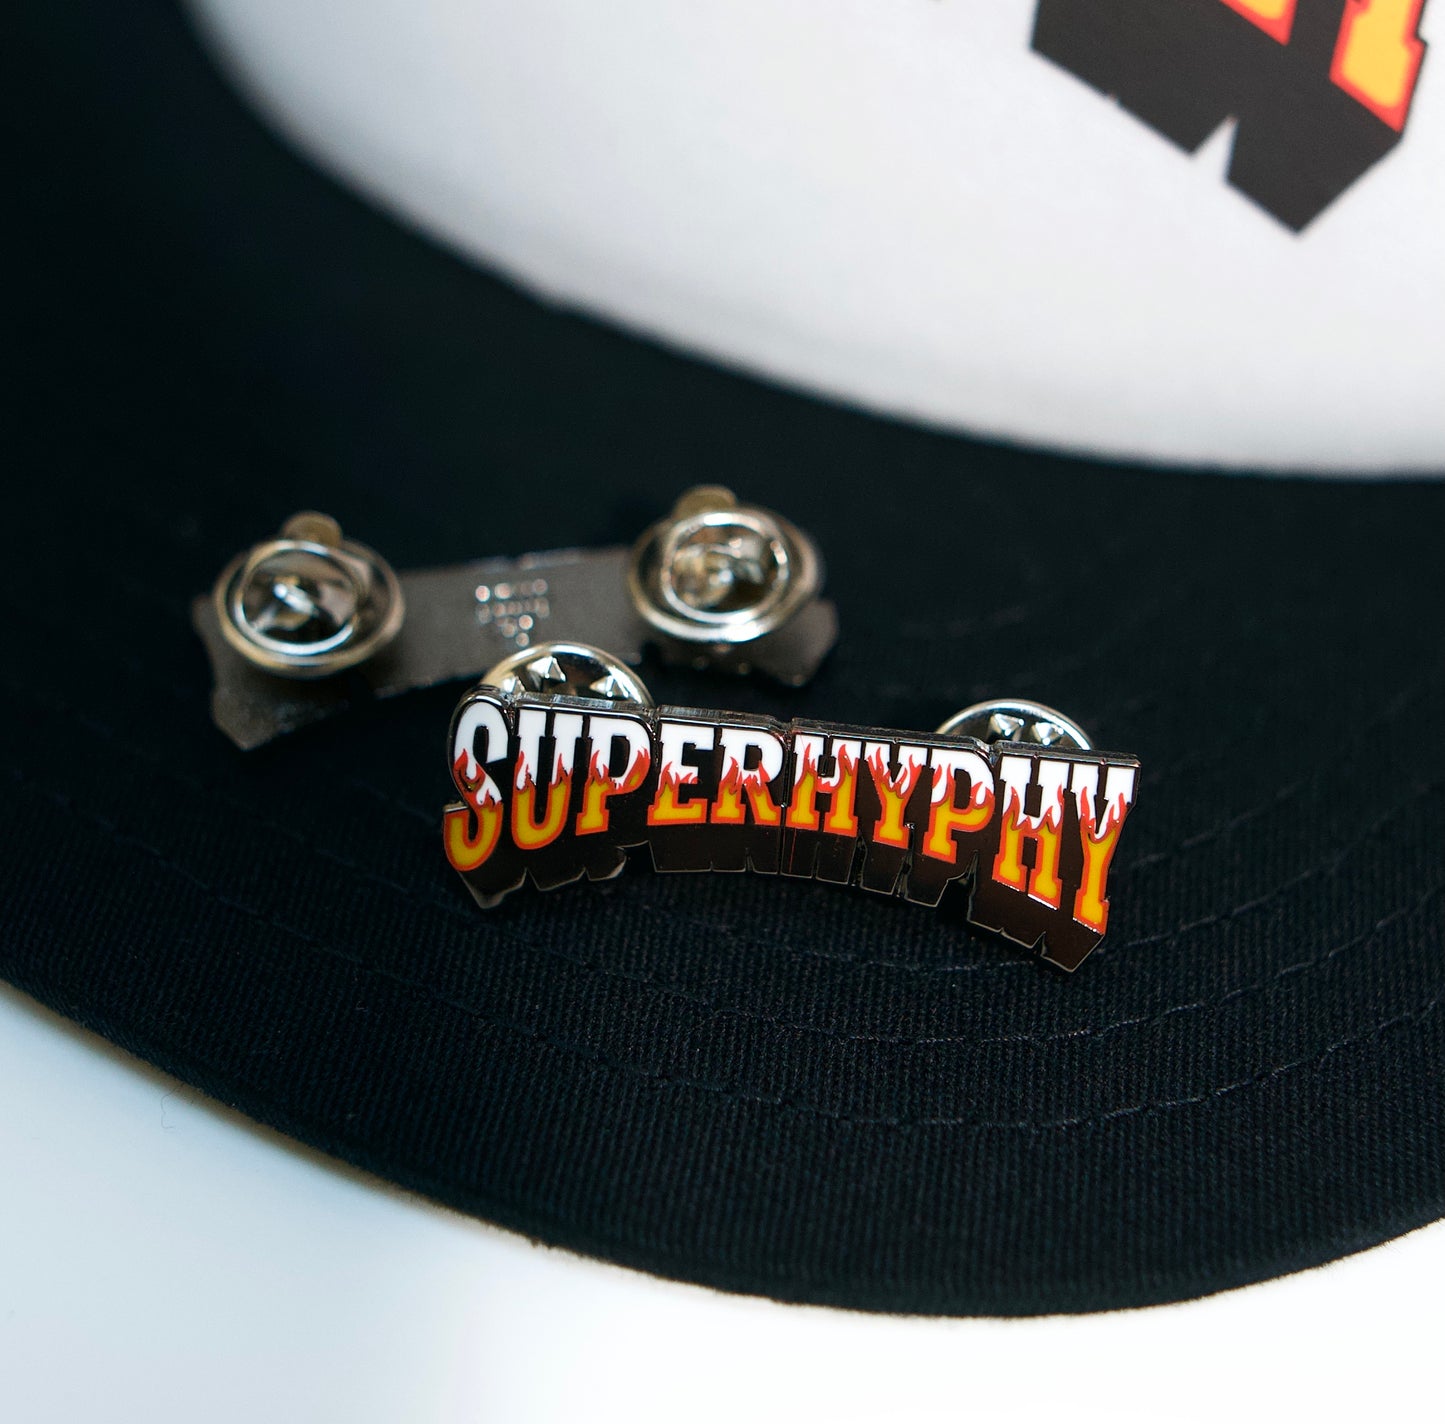 Black “Superhyphy” Trucker Cap